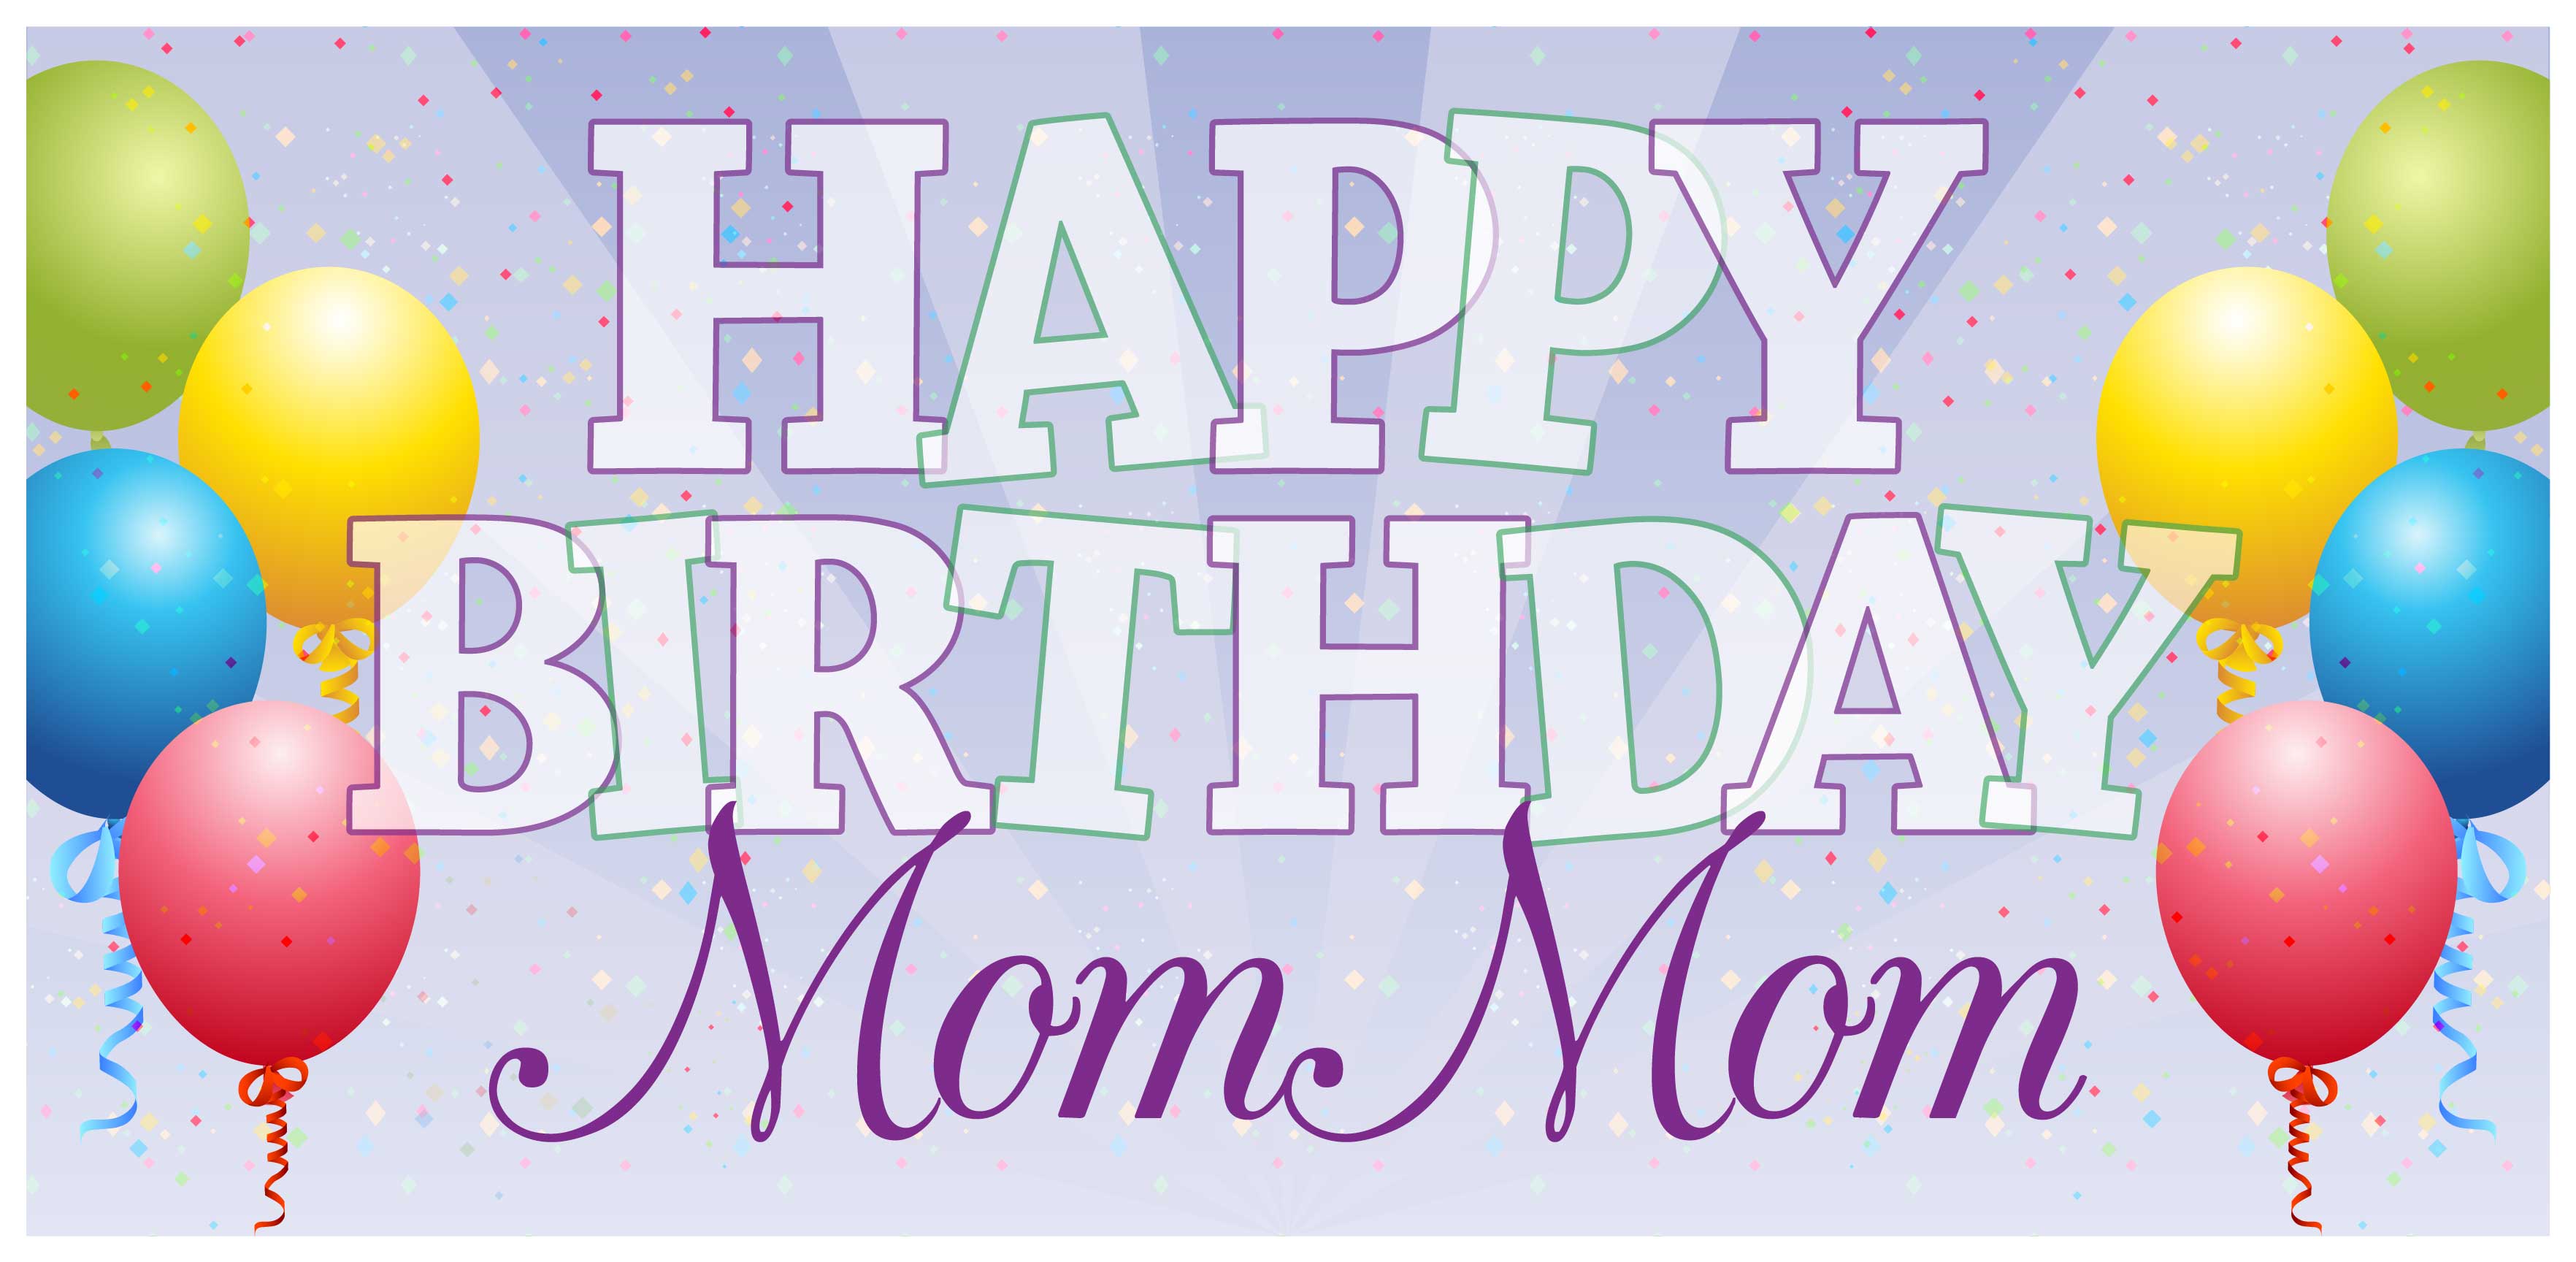 47+] Happy Birthday Mom Wallpaper - WallpaperSafari